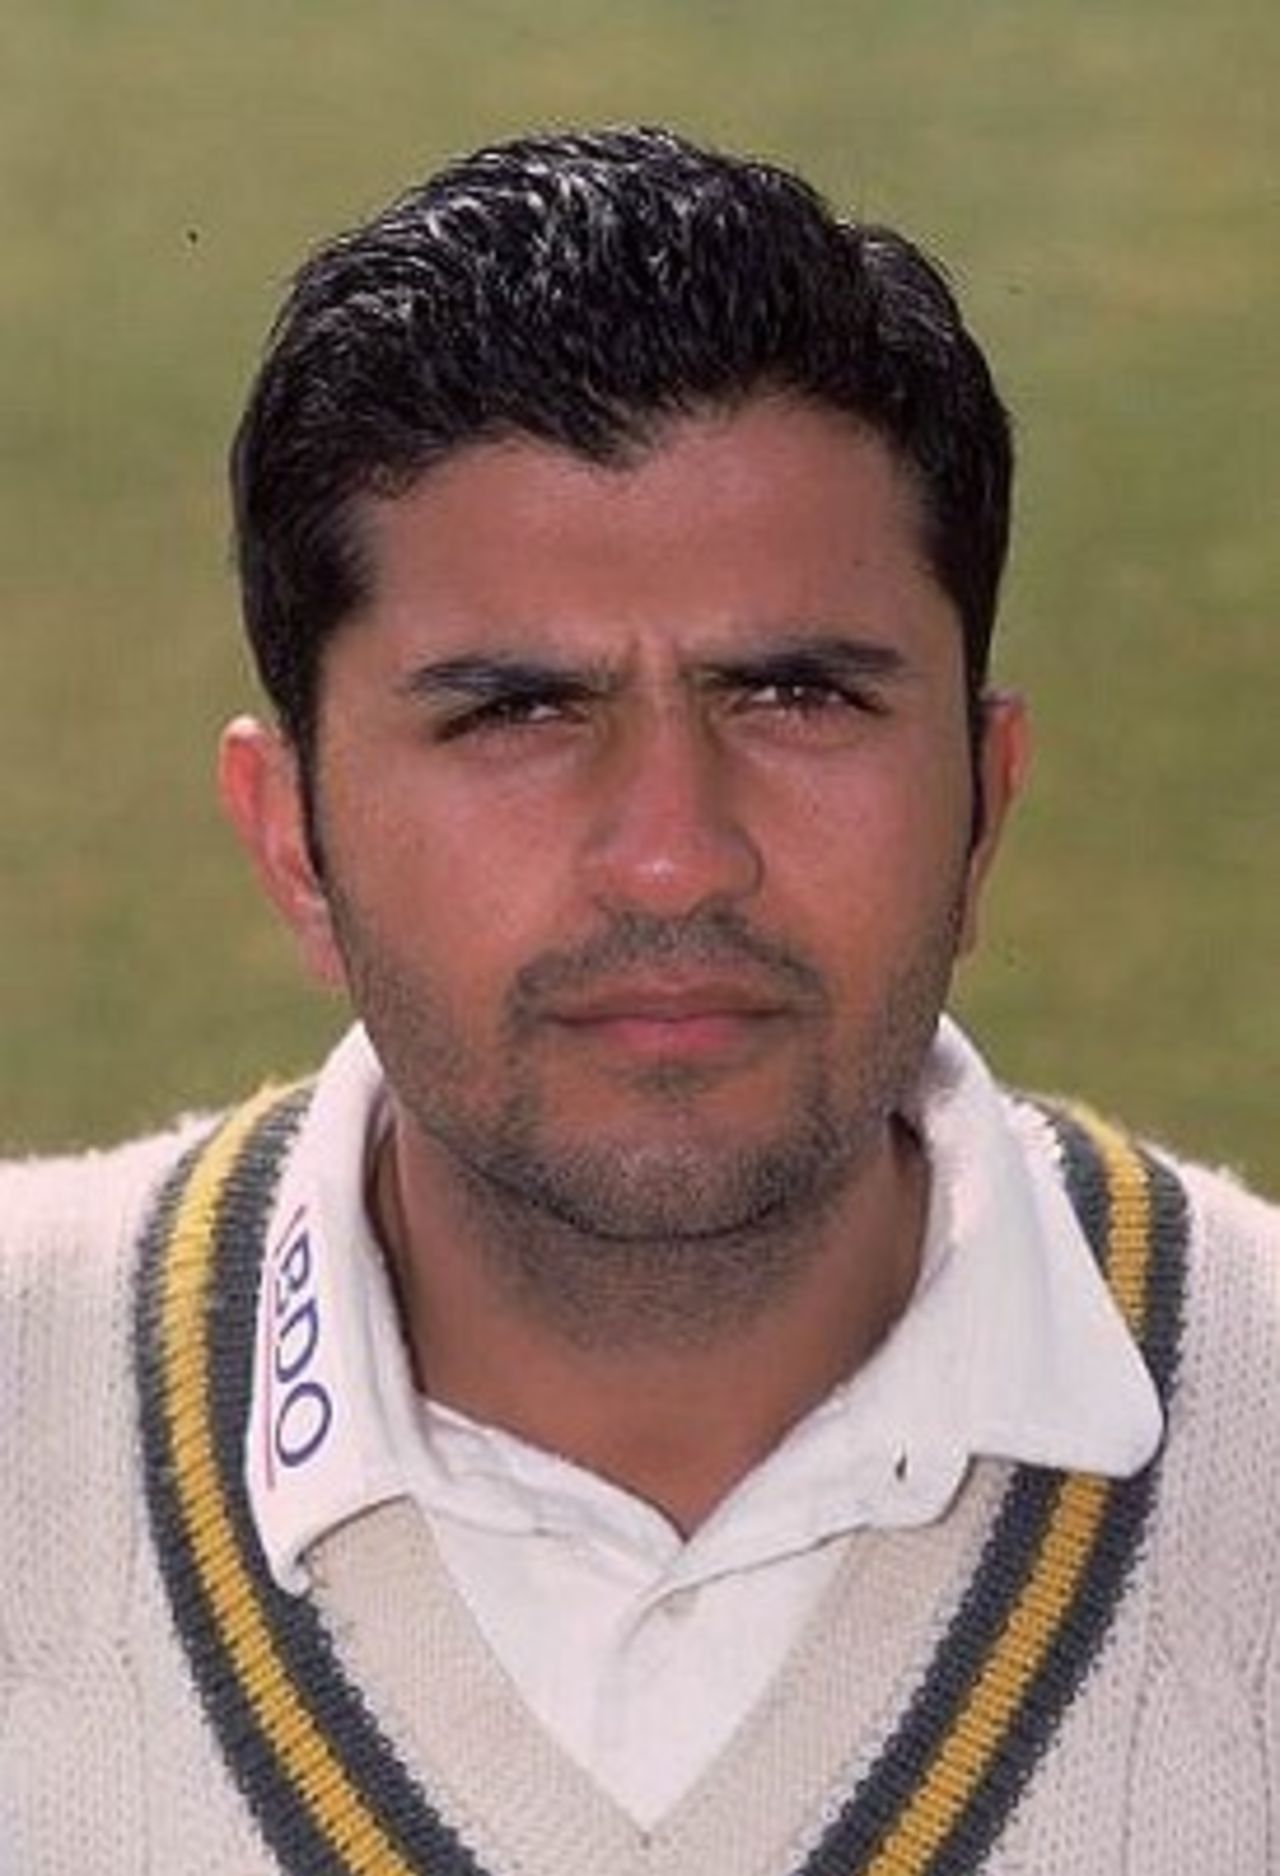 14 Apr 2000: Portrait of Usman Afzaal of Nottinghamshire CCC taken at Trent Bridge in Nottingham, England.